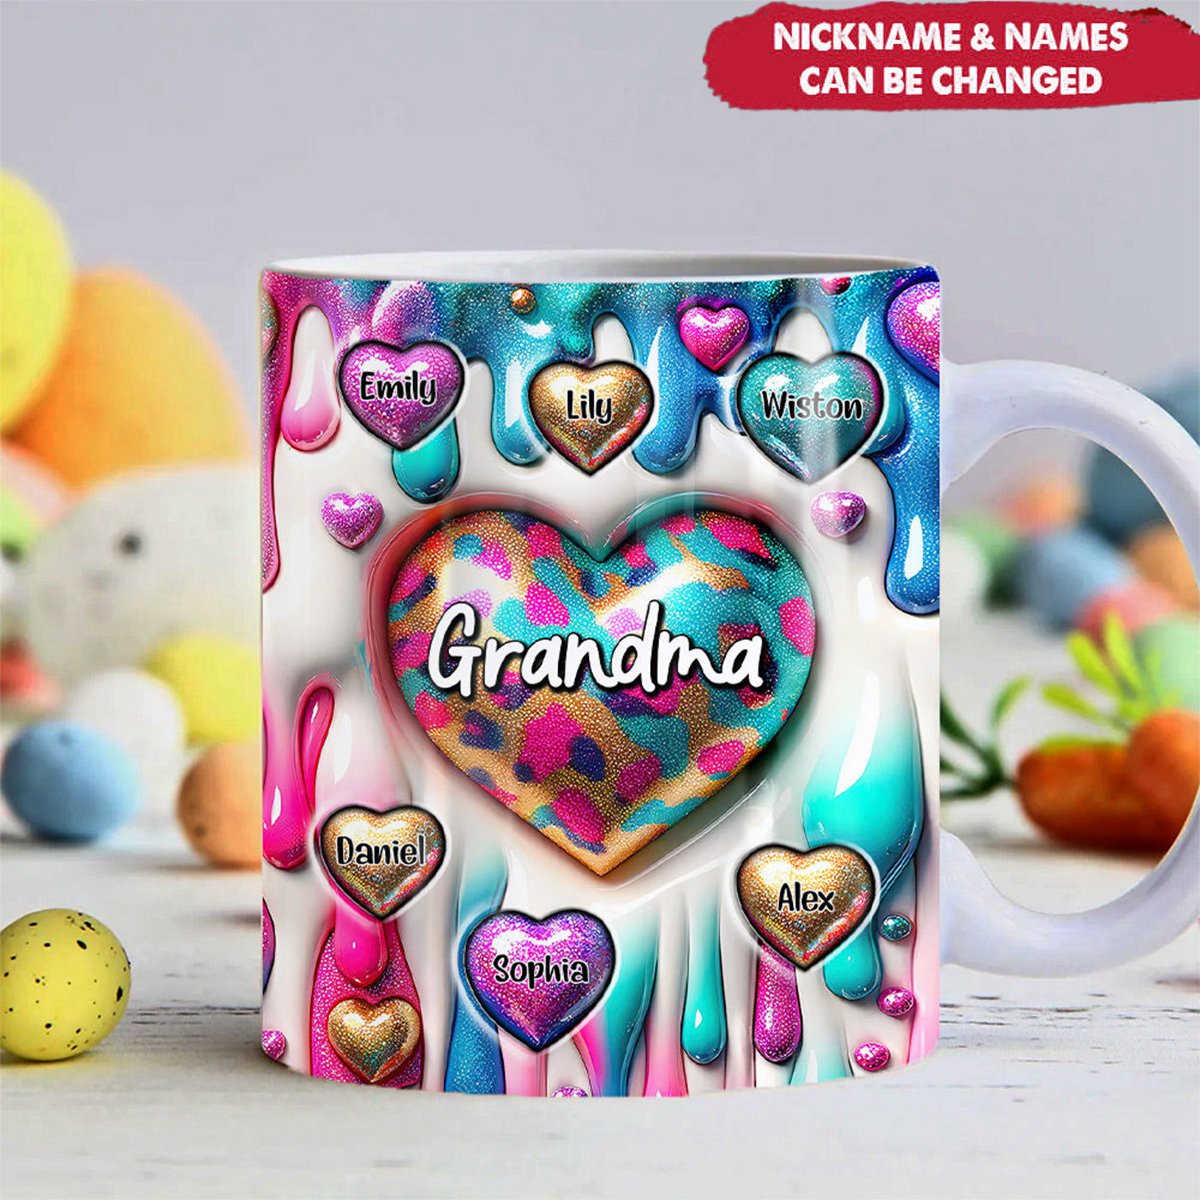 Personalized Sweet Heart Grandma Mom Kids Mug